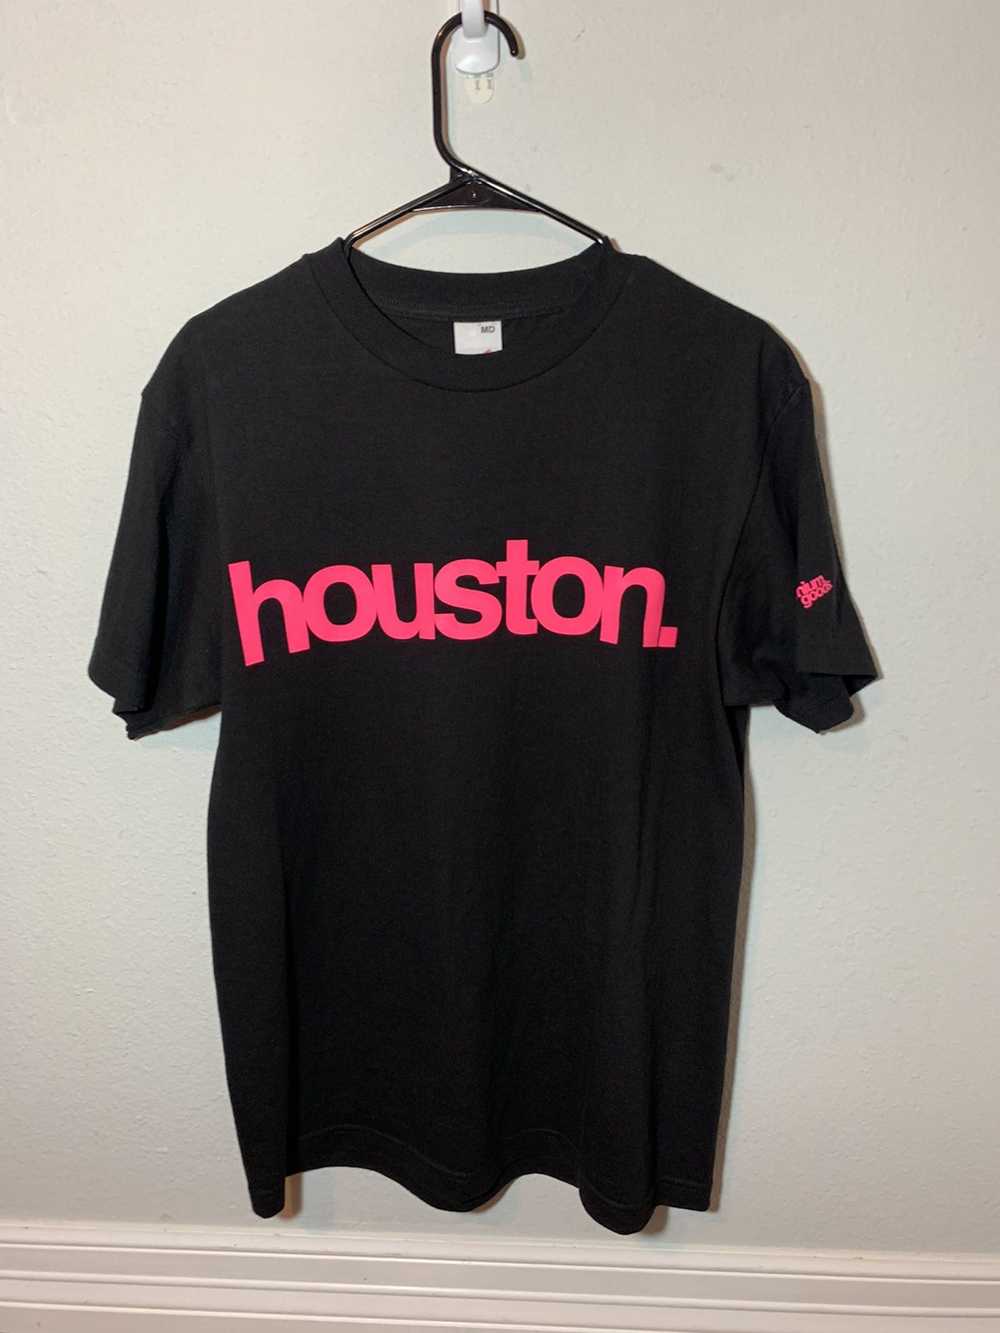 Streetwear Houston t-shirt from Premium Goods - image 1